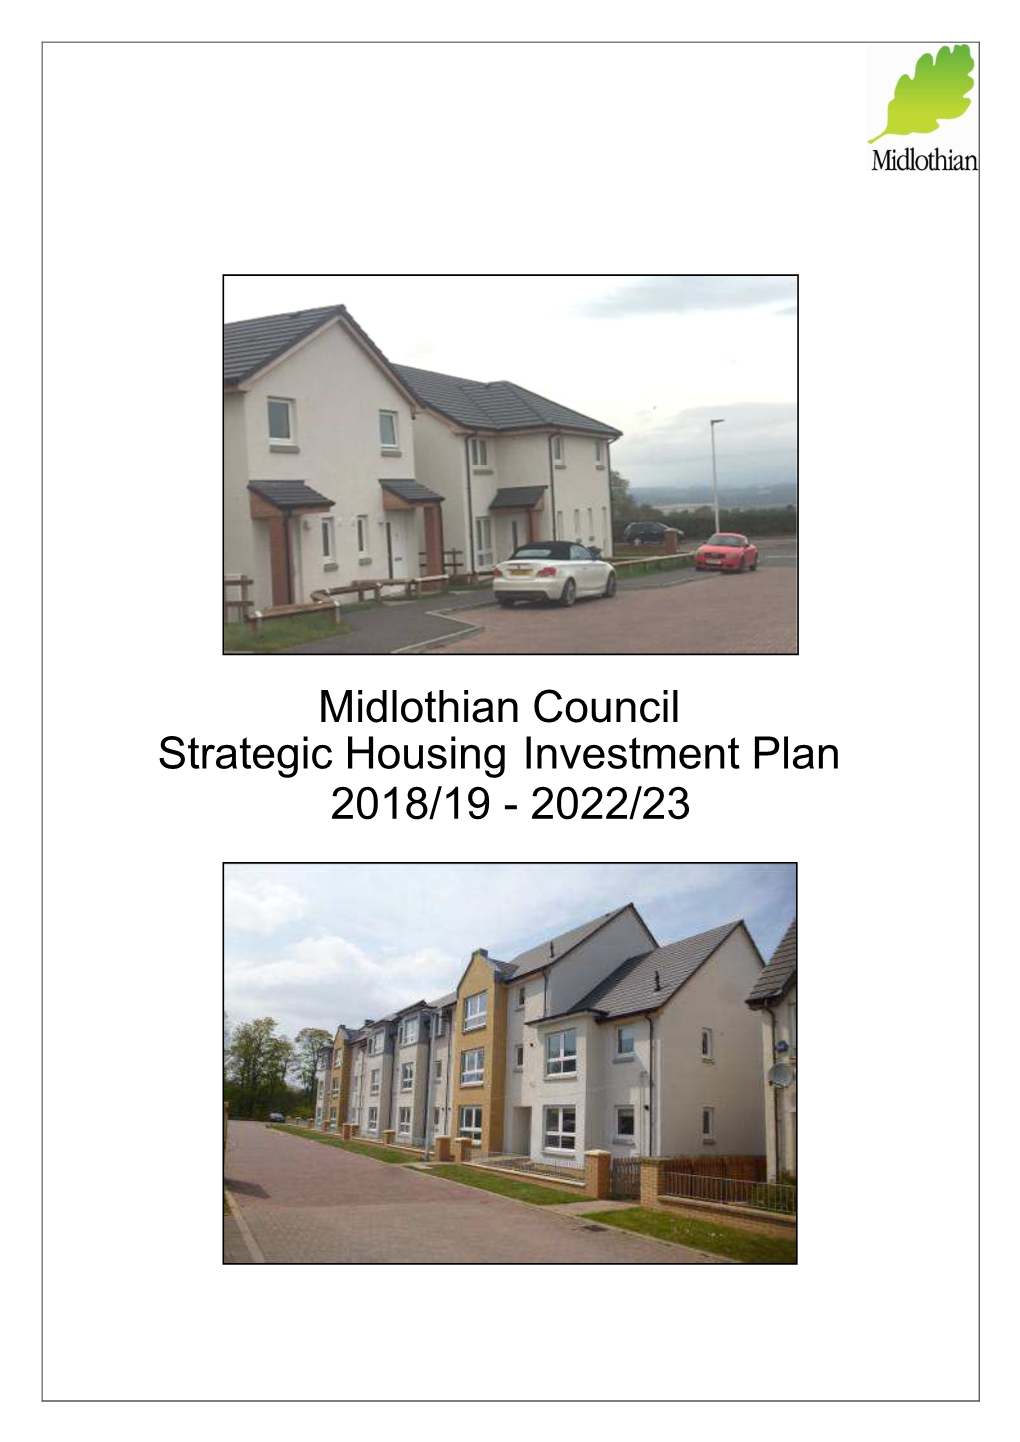 Midlothian Council Strategic Housing Investment Plan 2018/19